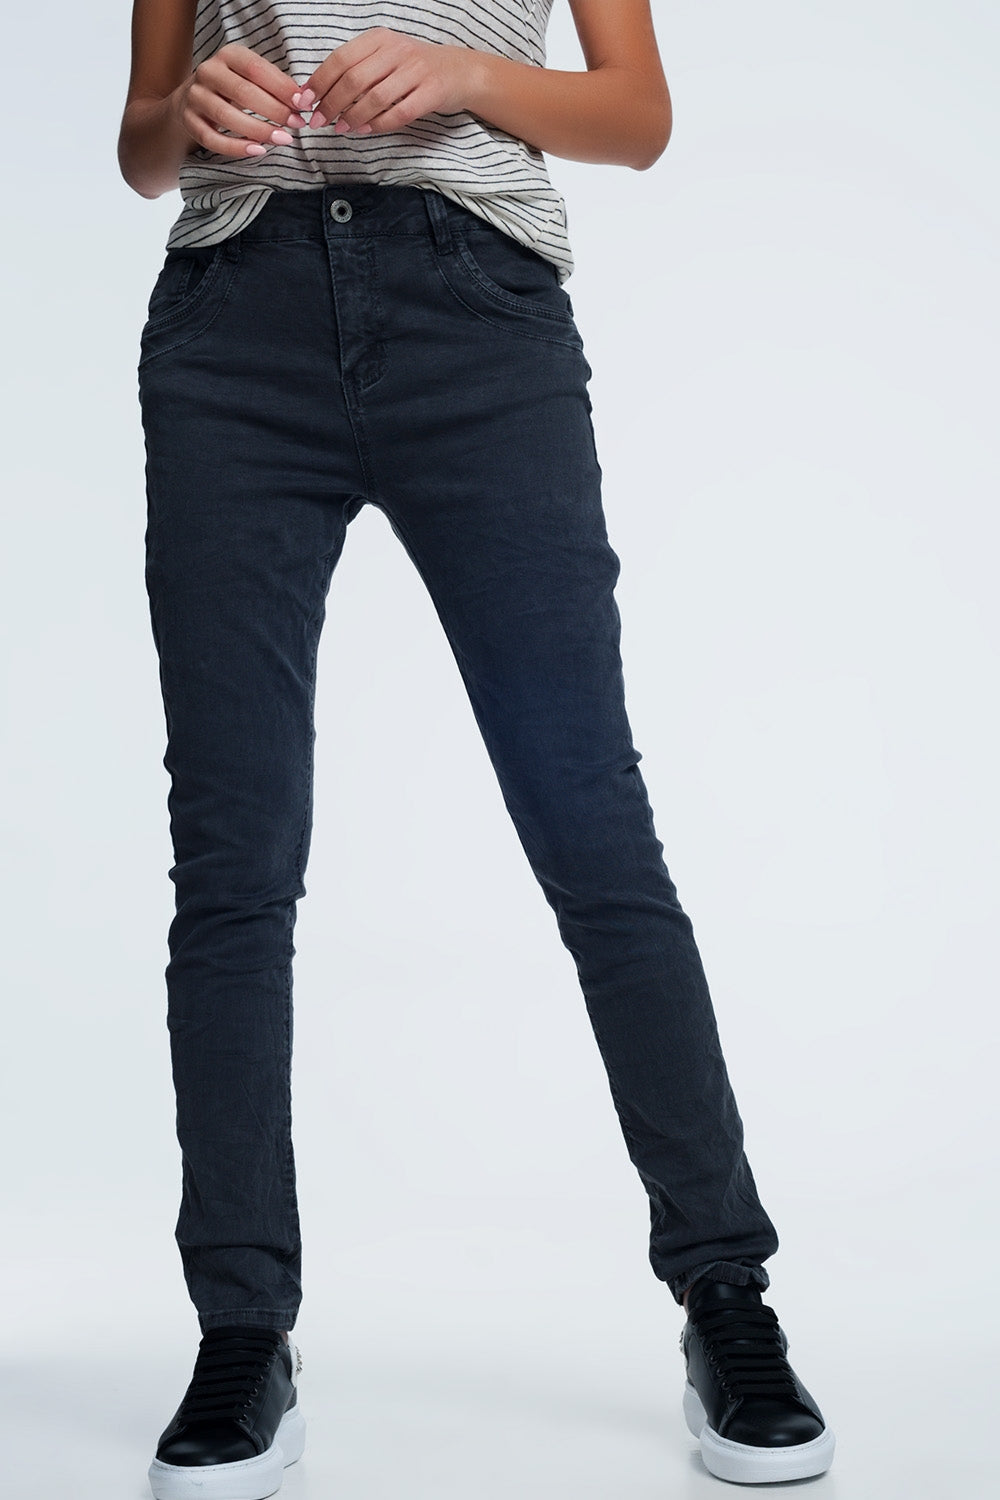 Drop crotch skinny jean in grey